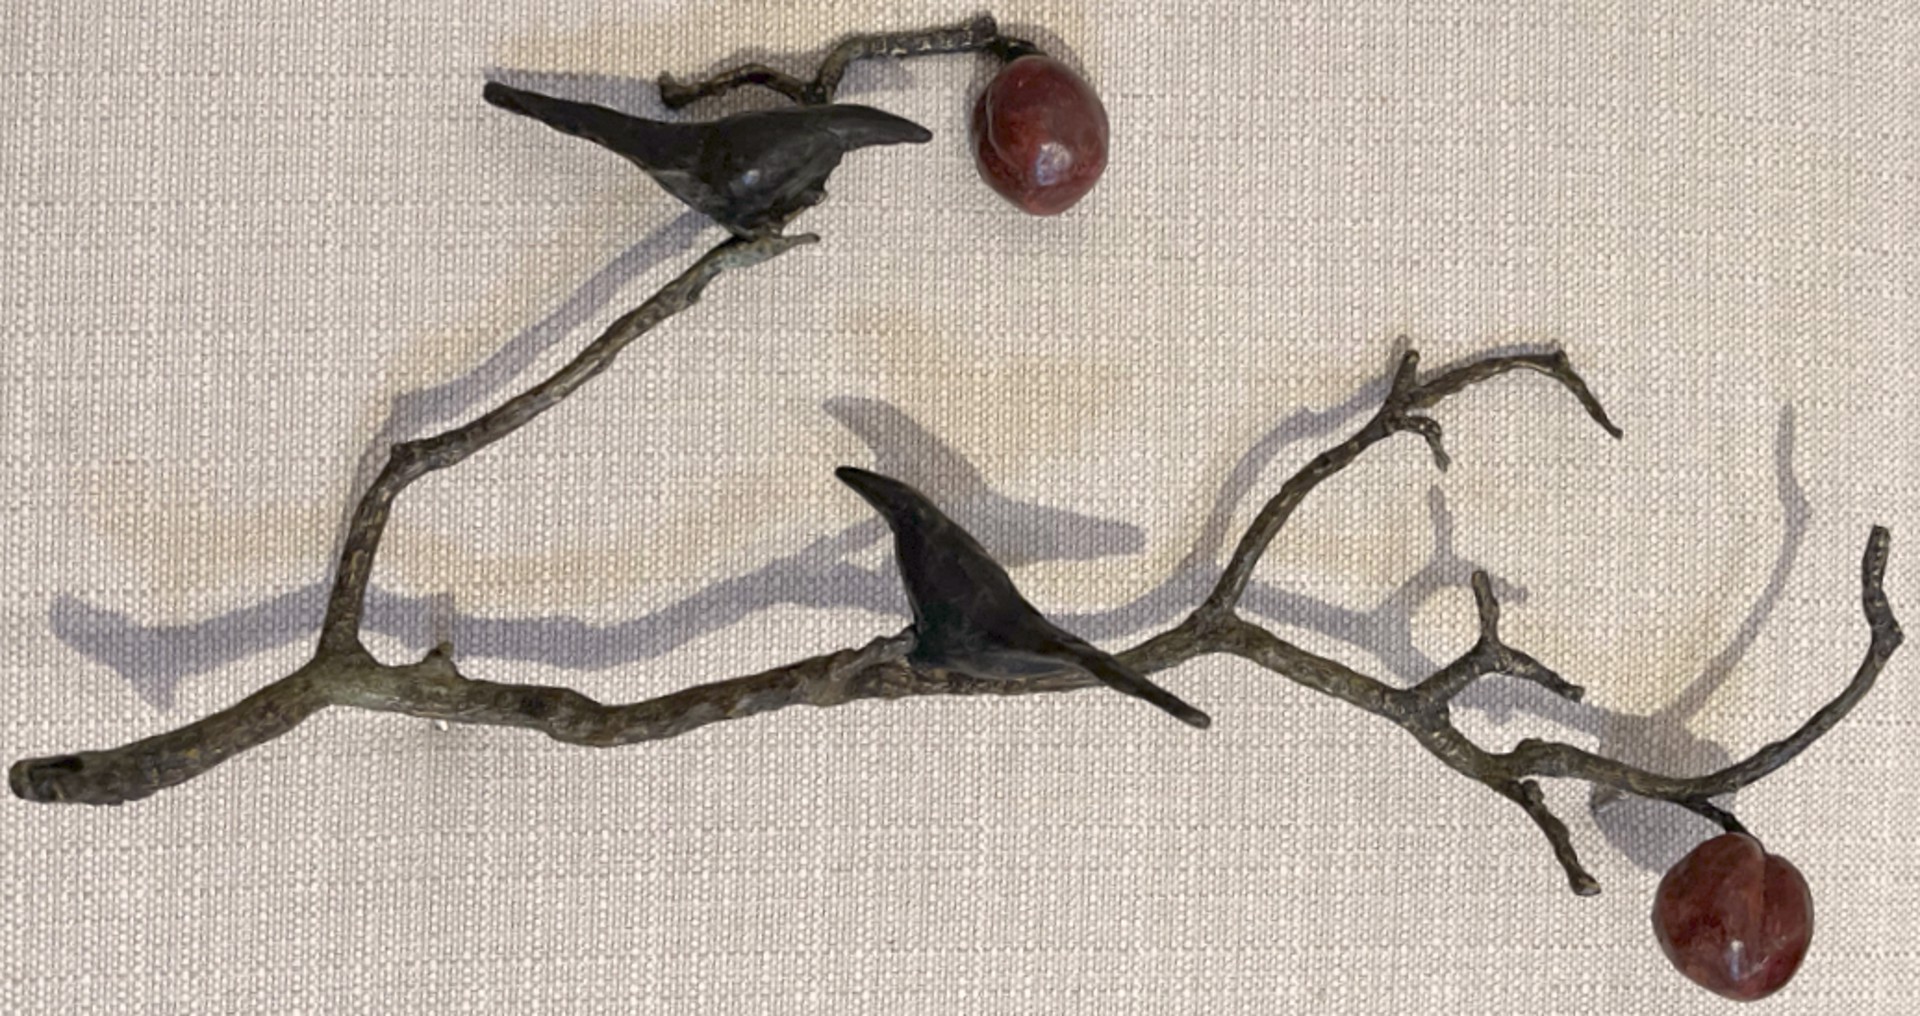 2 Blackbirds on a Branch, 2 Fruits by Copper Tritscheller